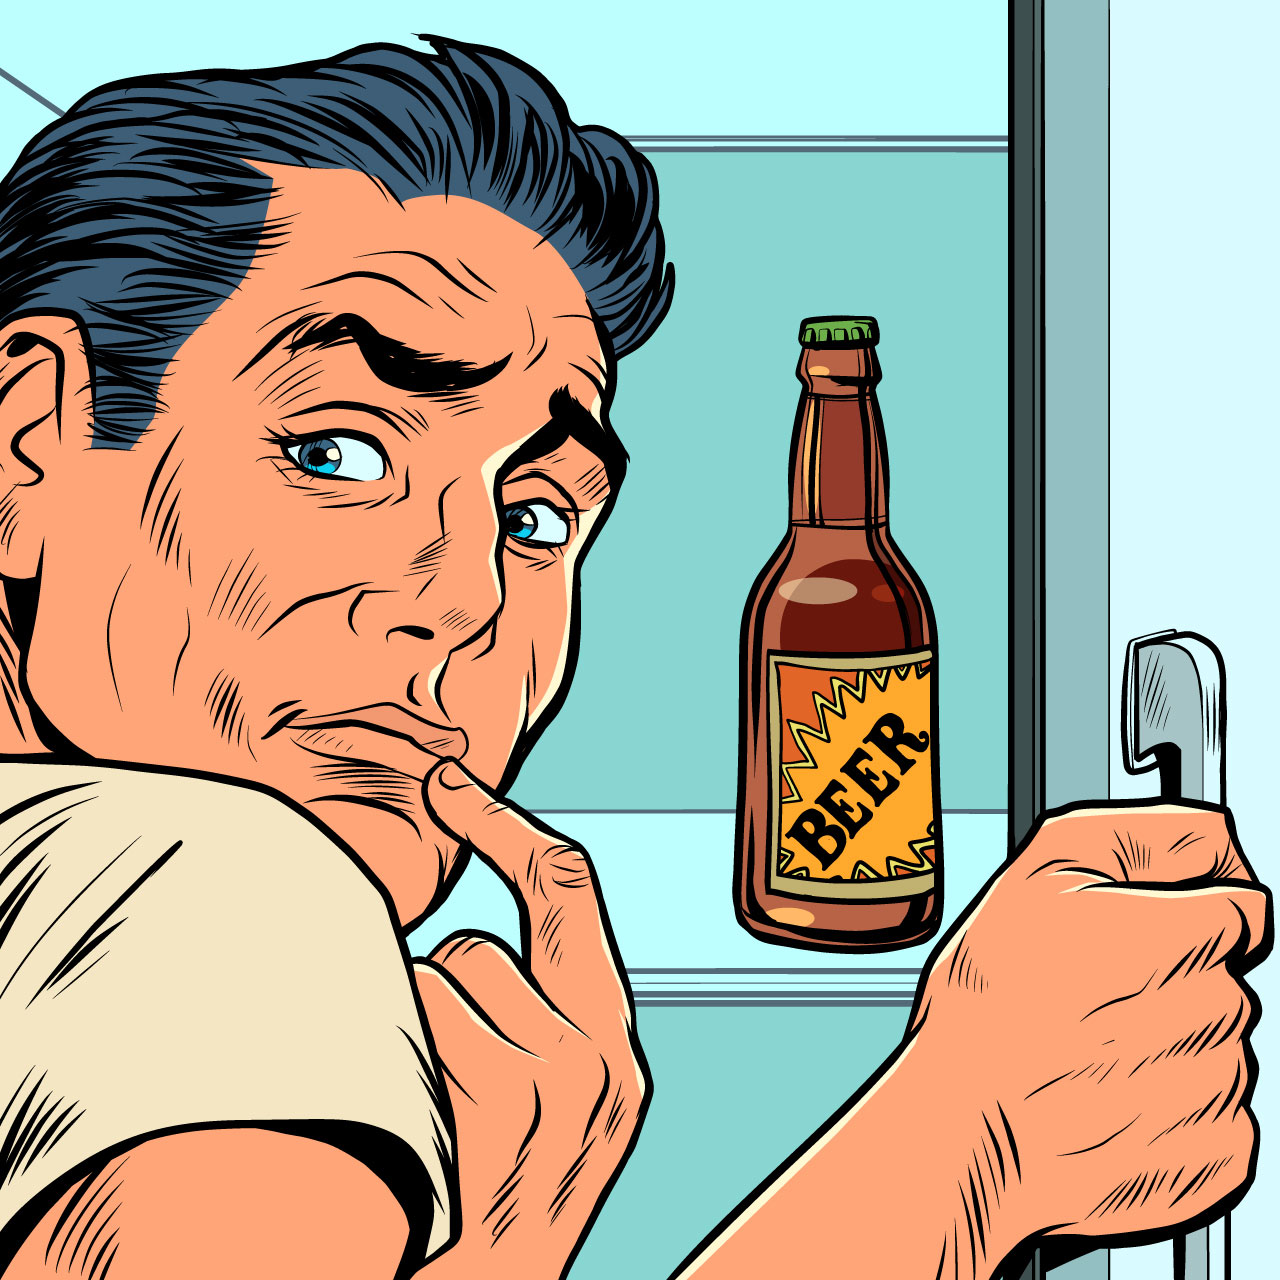 Man near refrigerator with beer alcohol addiction cartoon image